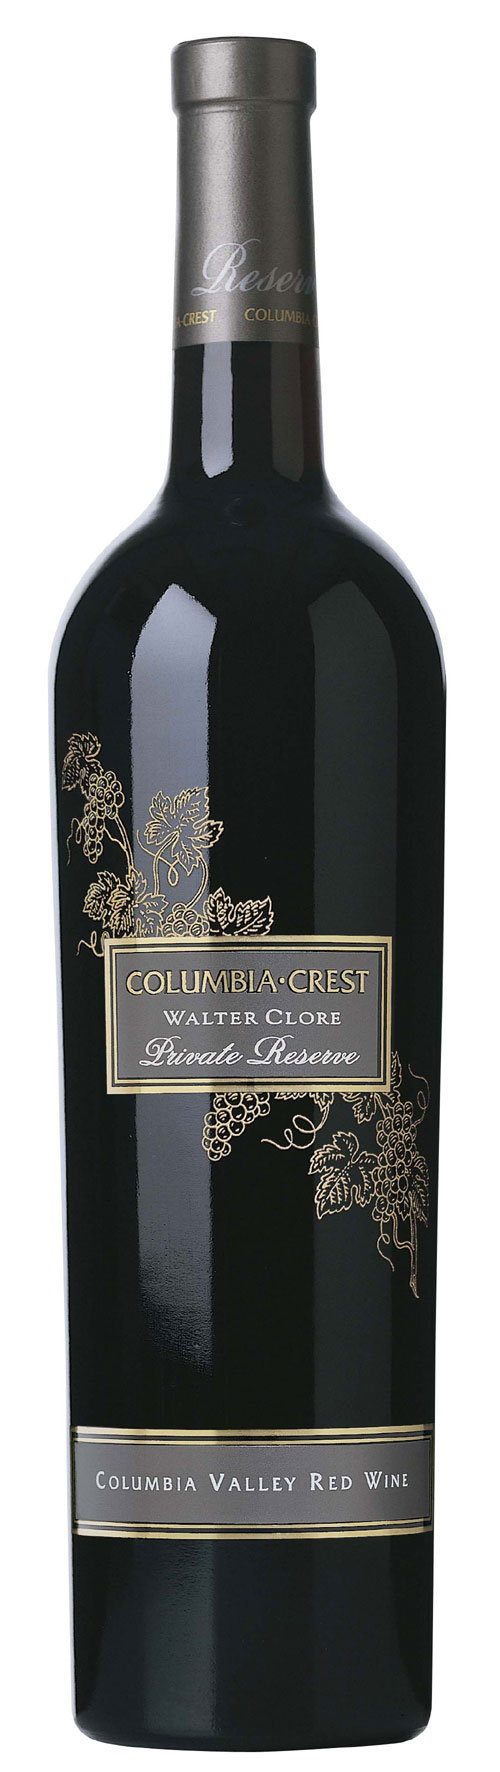 Columbia Crest Private Reserve Walter Clore 2012